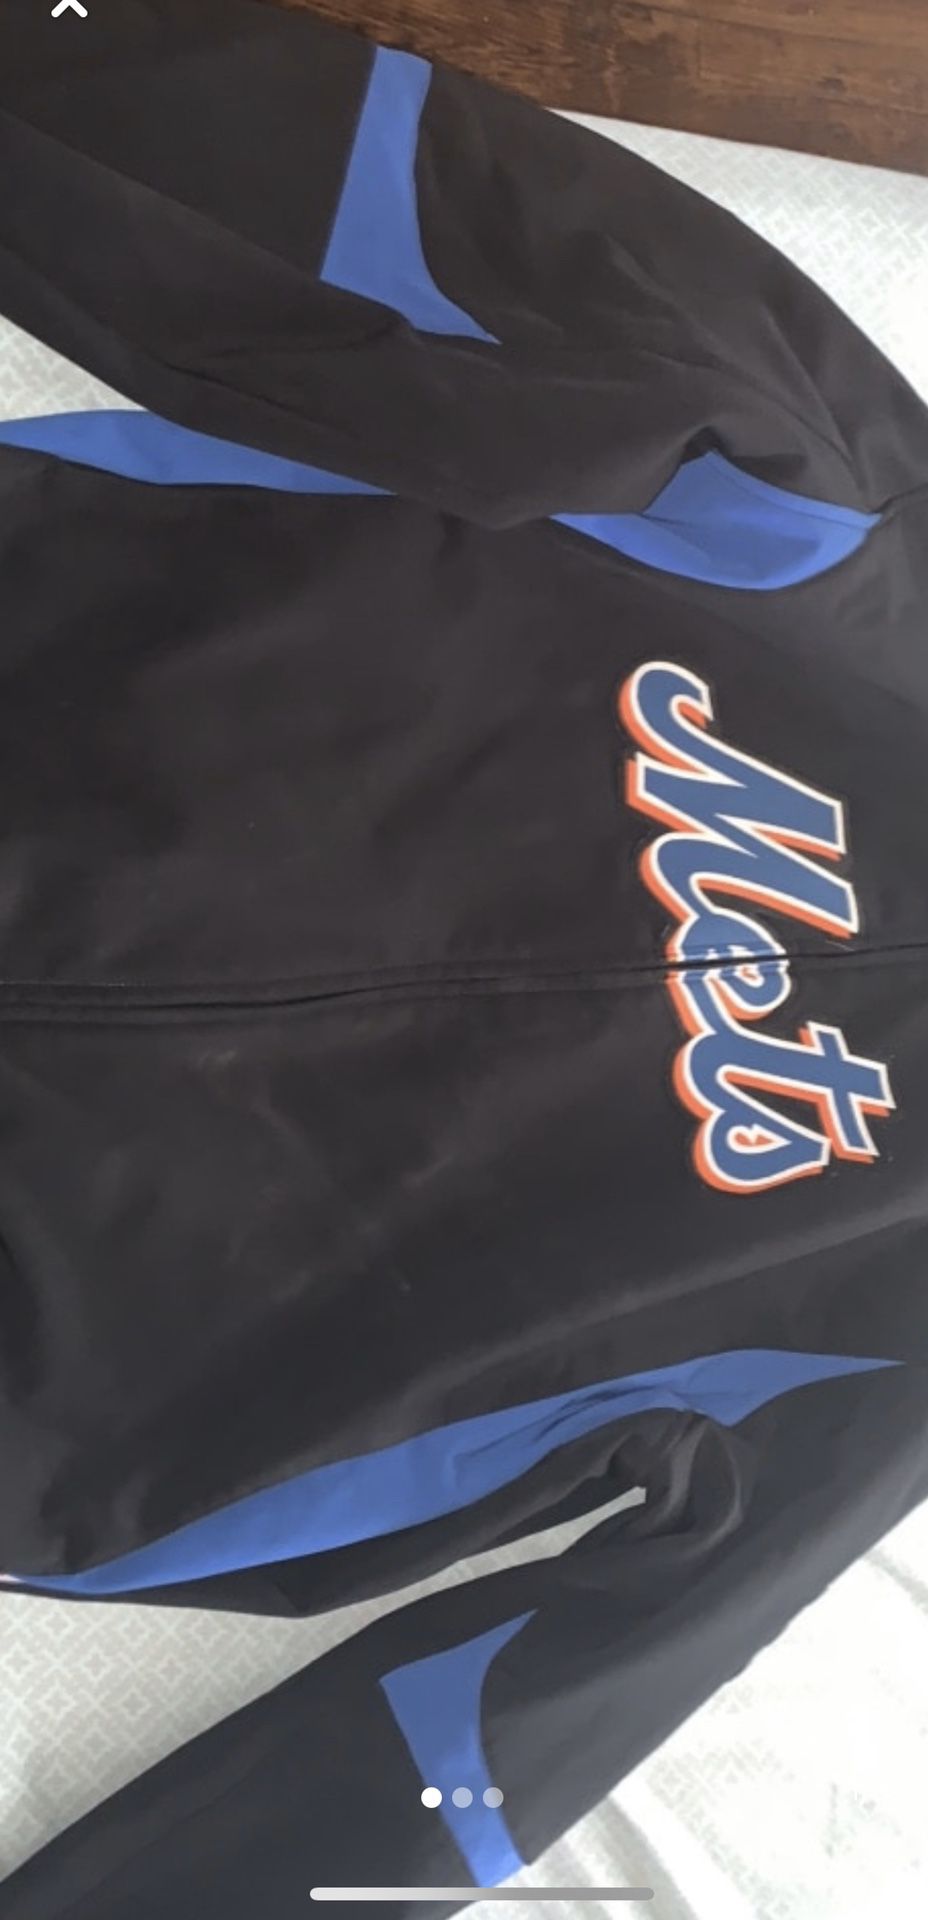 Mets batting jacket